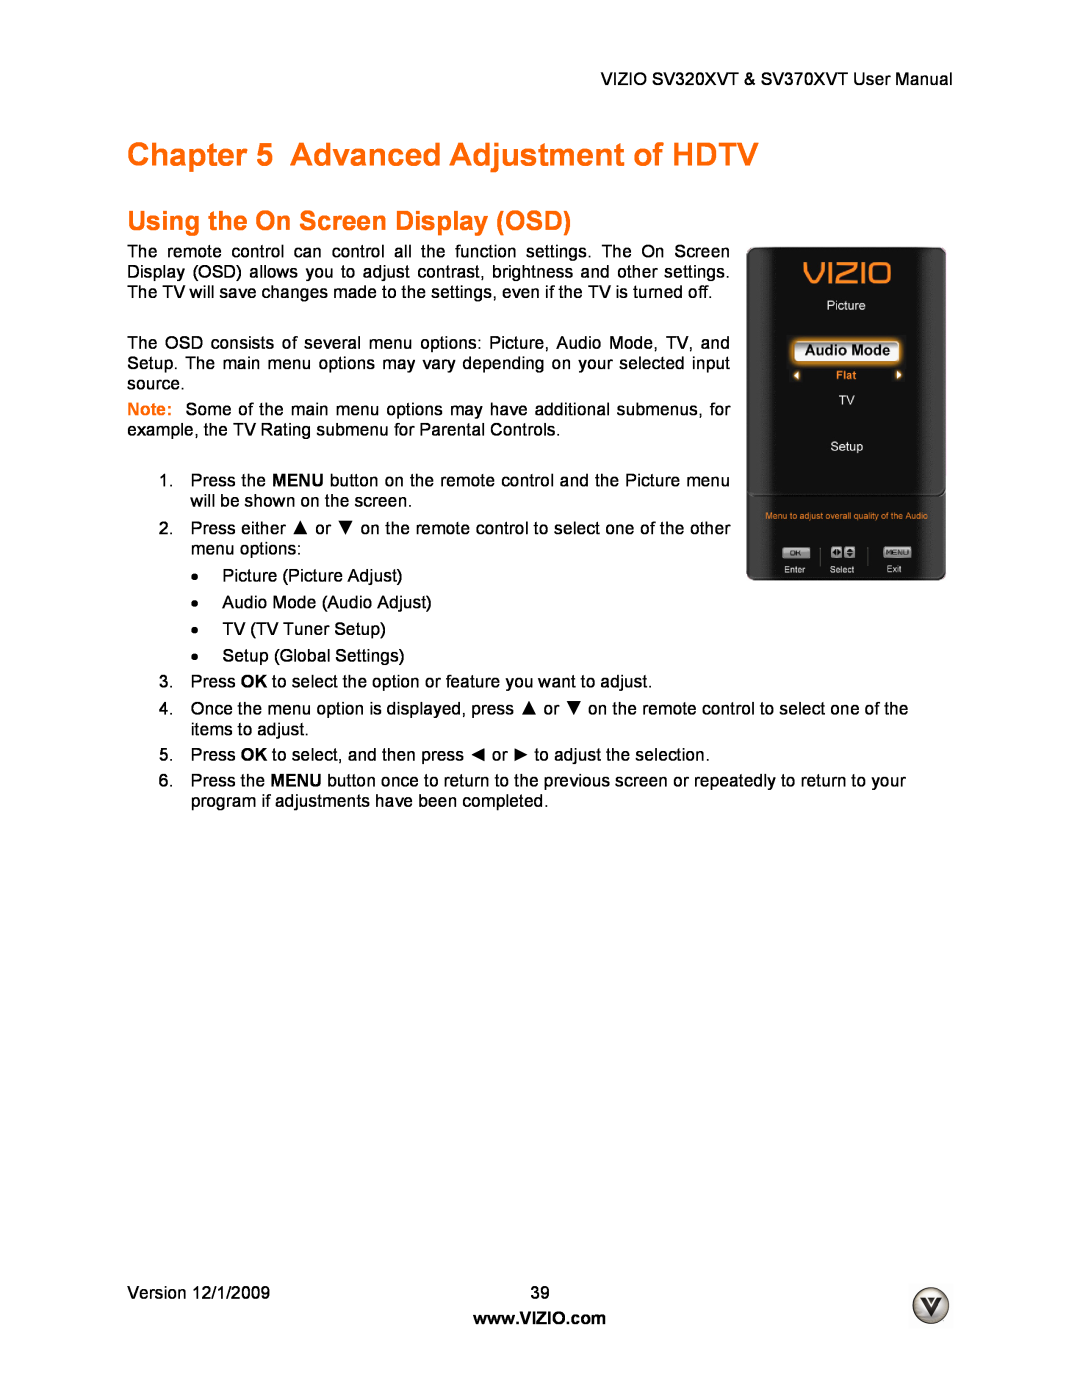 Vizio SV370XVT, SV320XVT user manual Advanced Adjustment of HDTV, Using the On Screen Display OSD 